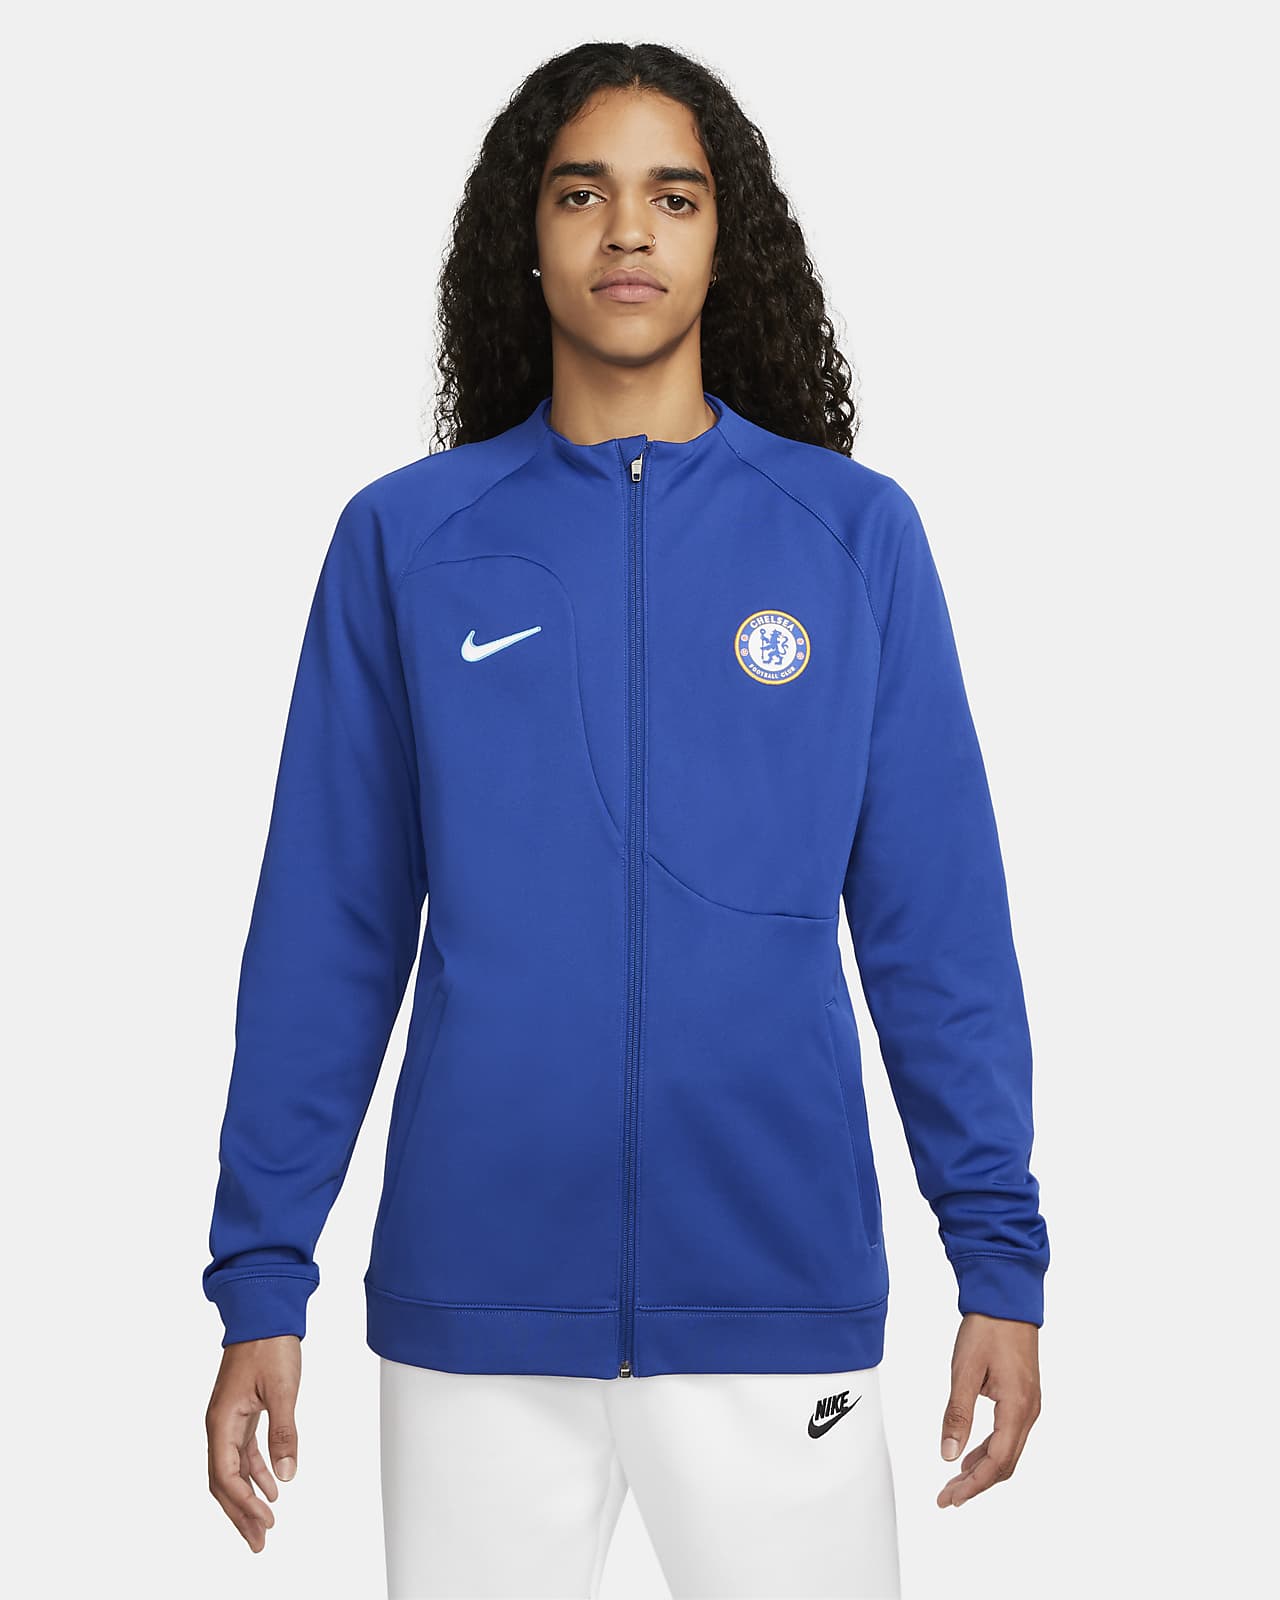 congelado Mendicidad Quejar Chelsea FC Academy Pro Men's Nike Soccer Jacket. Nike.com